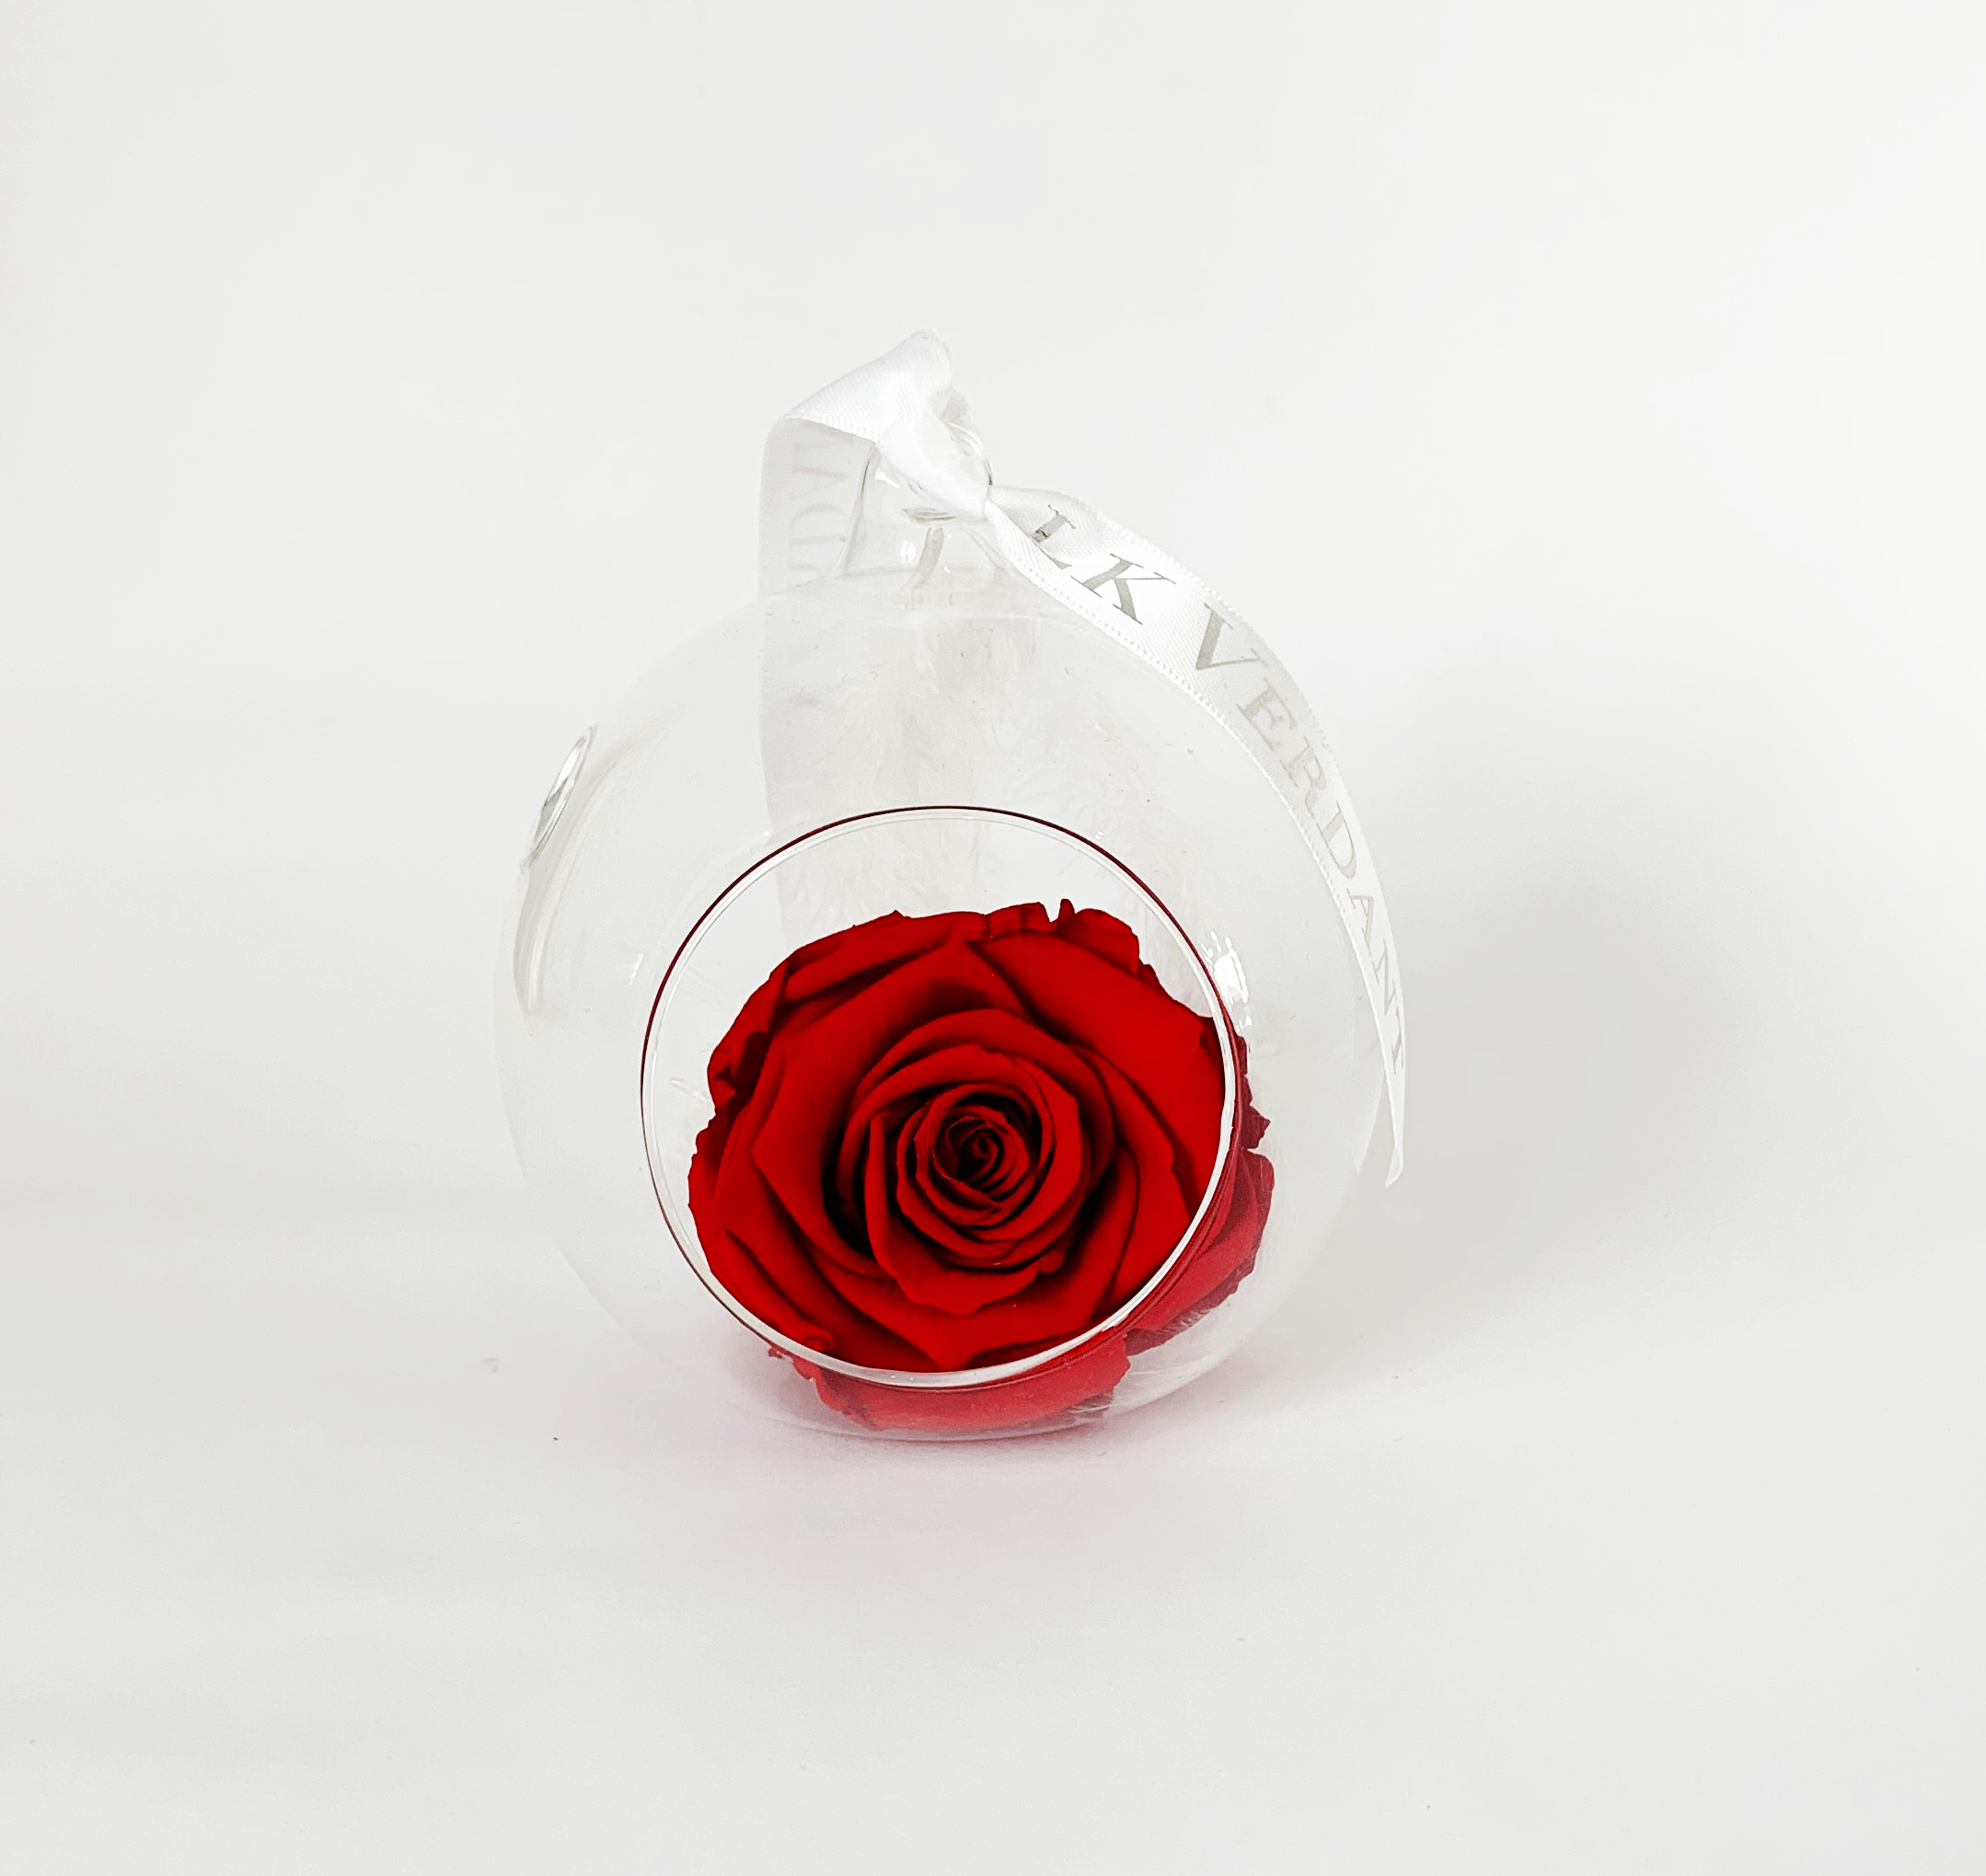 The Always Red Forever Rose - Shop for Flowers and Forever Roses - LK VERDANT